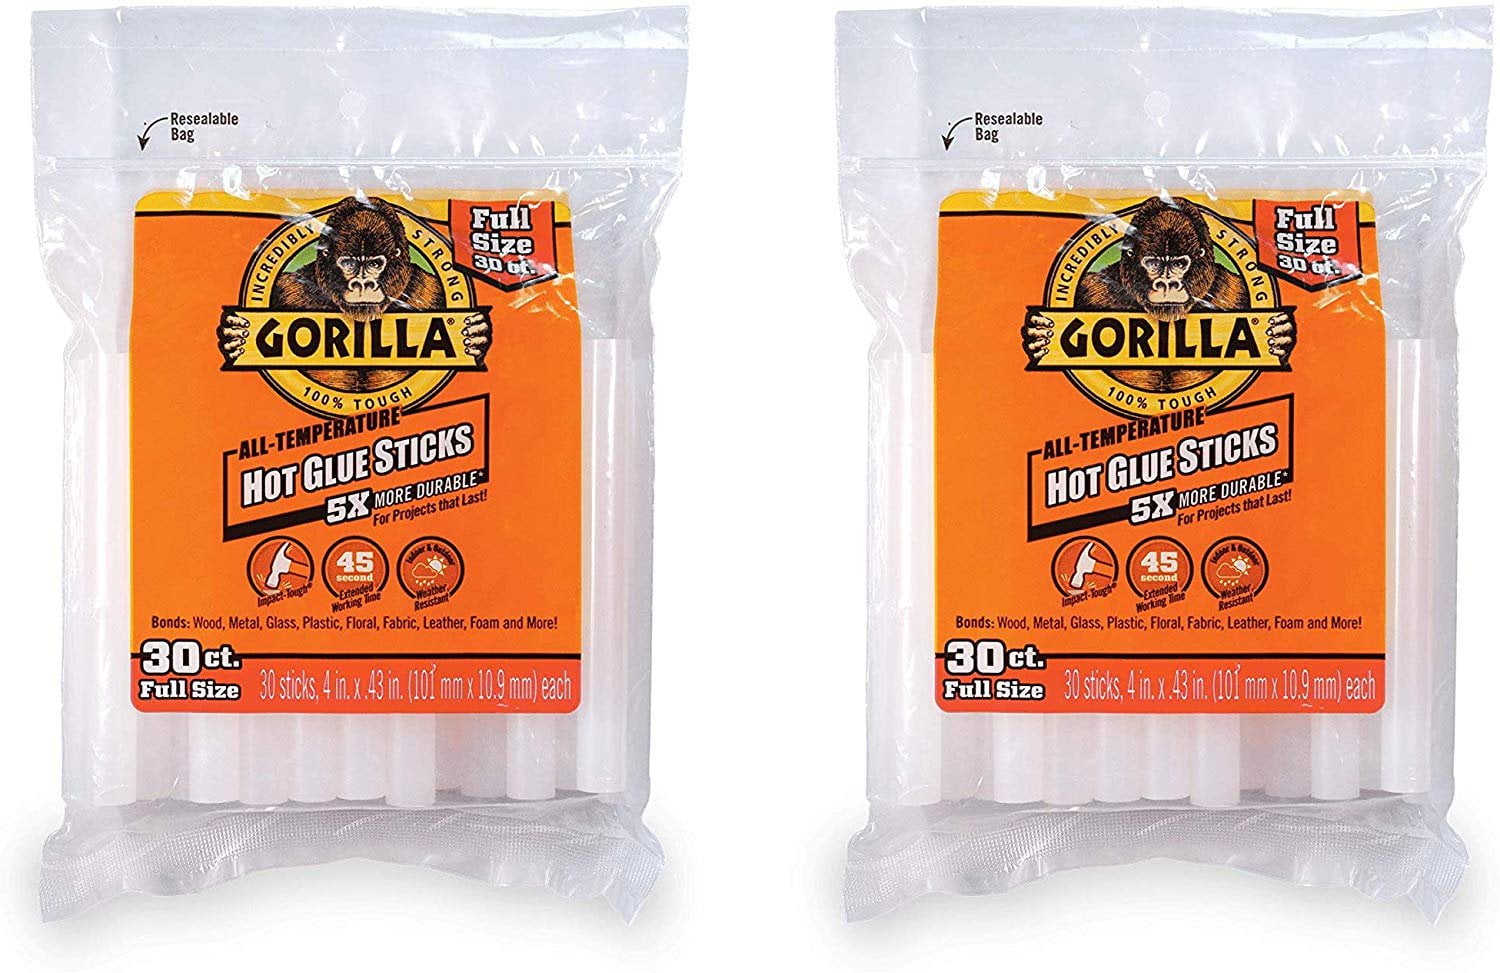 Gorilla 3033002-2 Hot Glue Sticks, 4 in. Full Size, 30 Count, Pack of 2,  2-Pack, 2 Piece